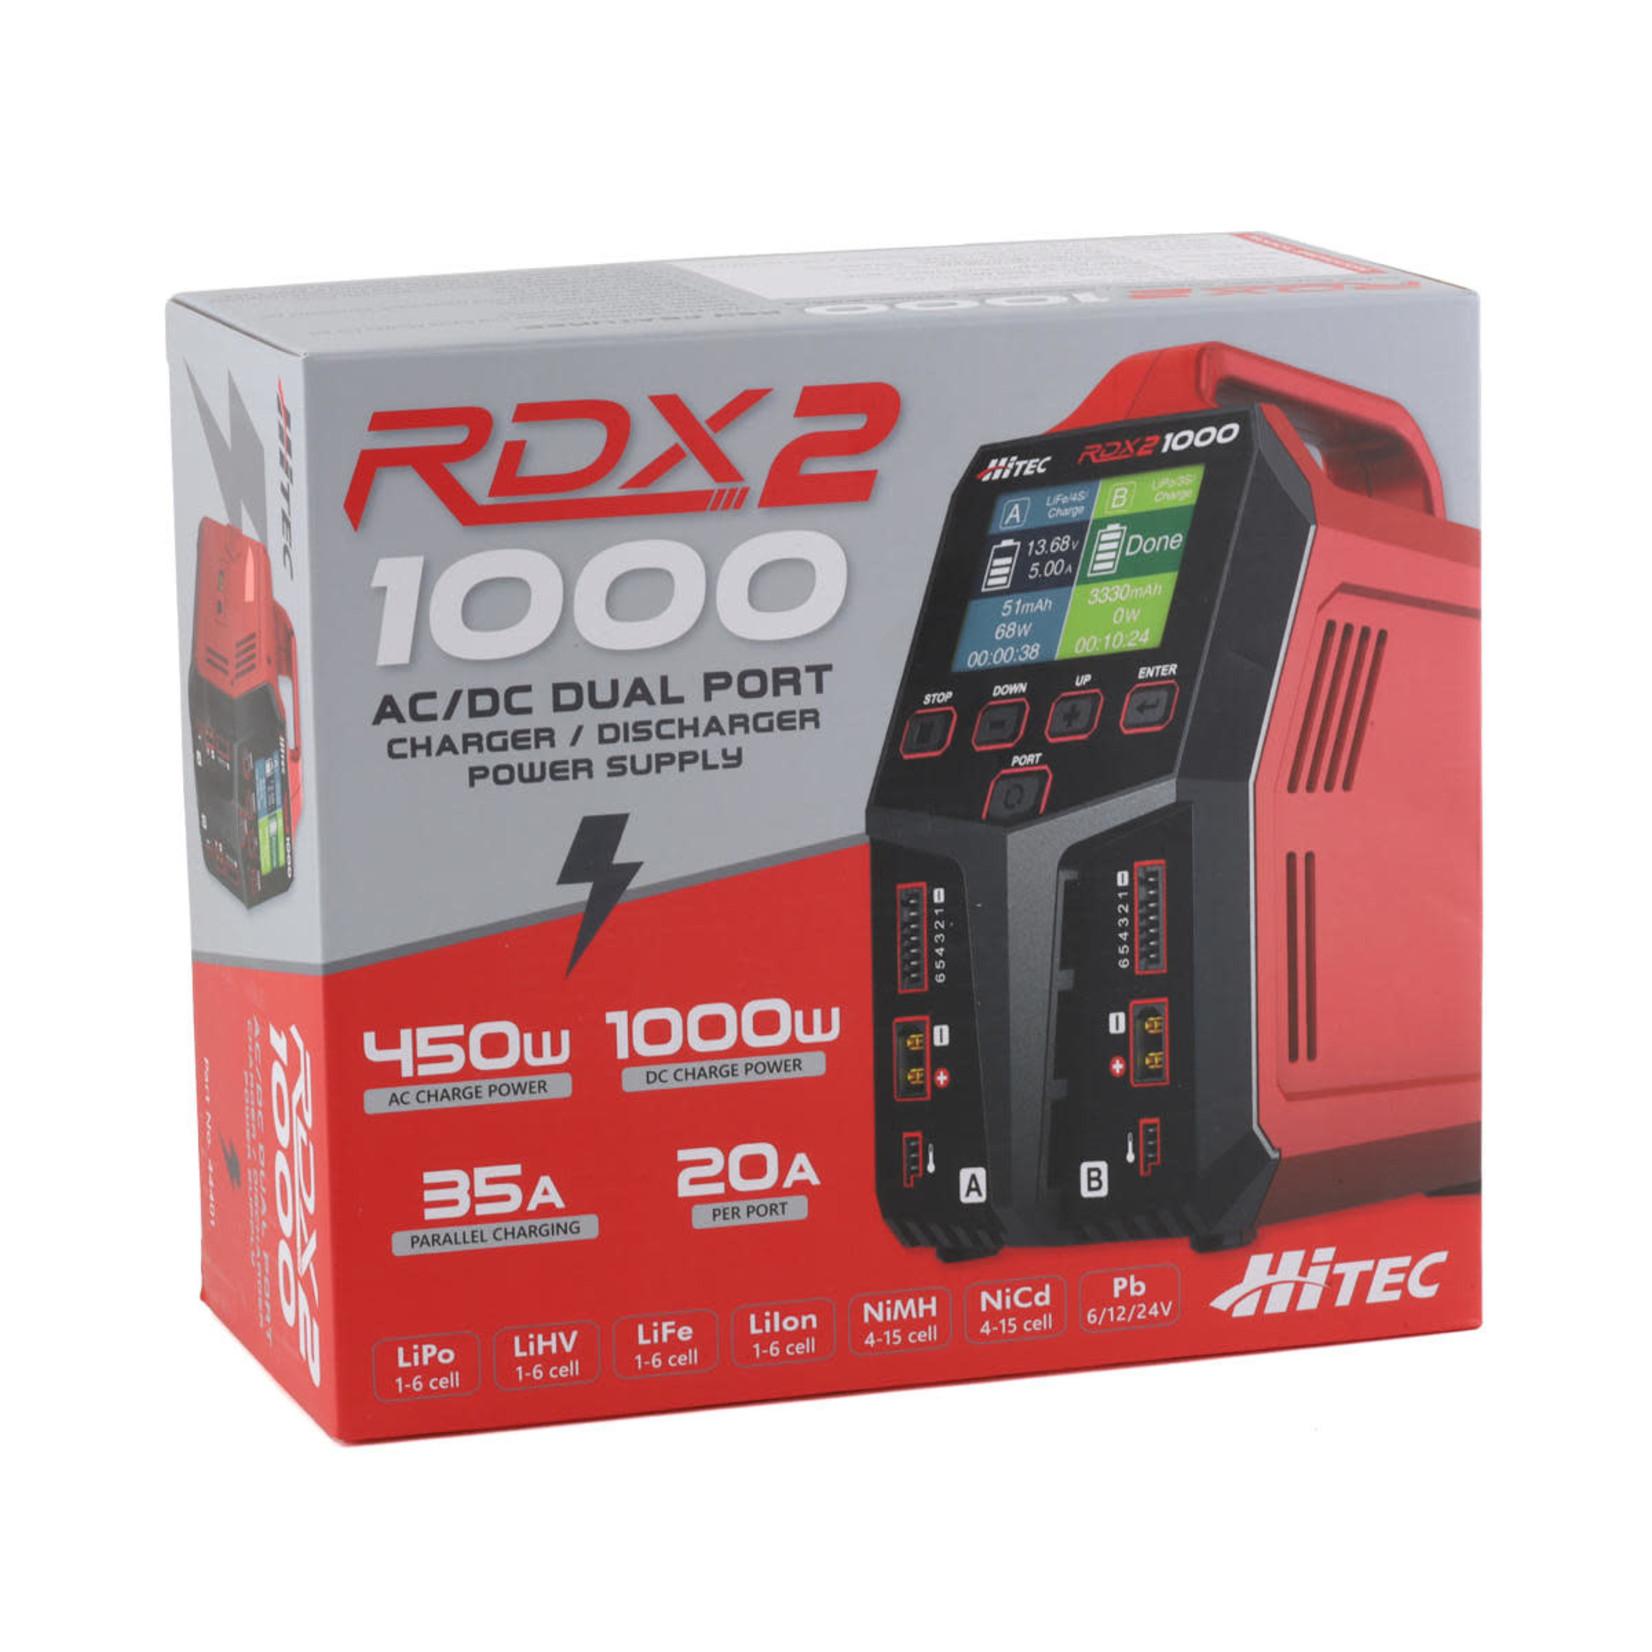 Hitec Hitec RDX2 1000 AC/DC Dual Charger (6S/20A/AC-450W/DC-1000W) #44401